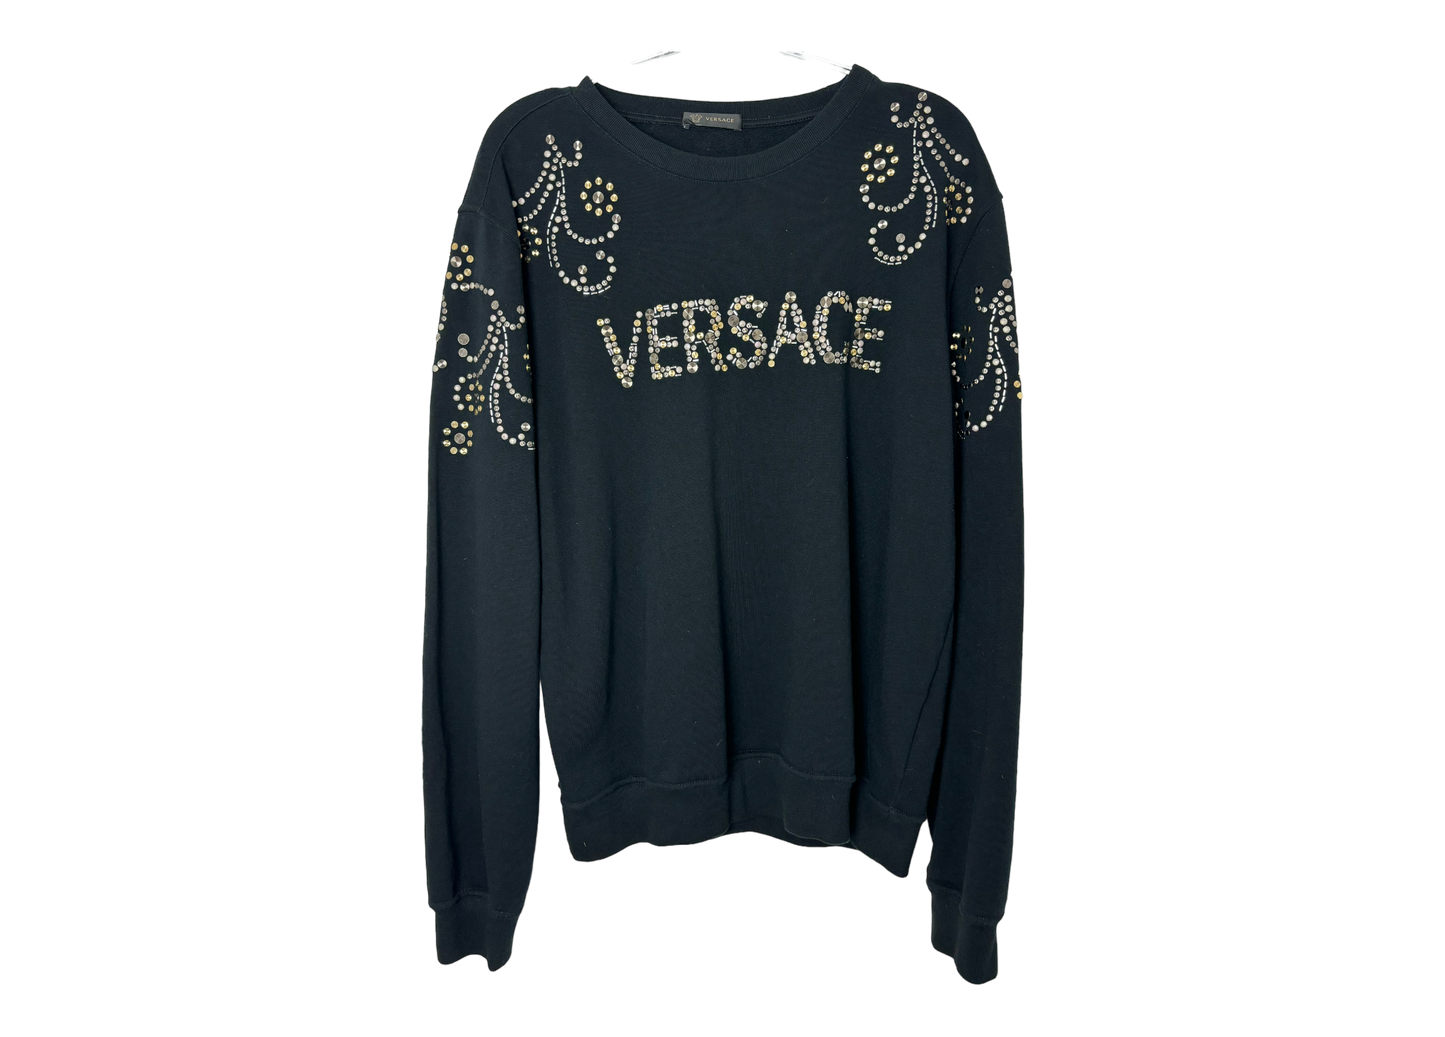 Versace Crewneck Logo Studs COND 9.5/10